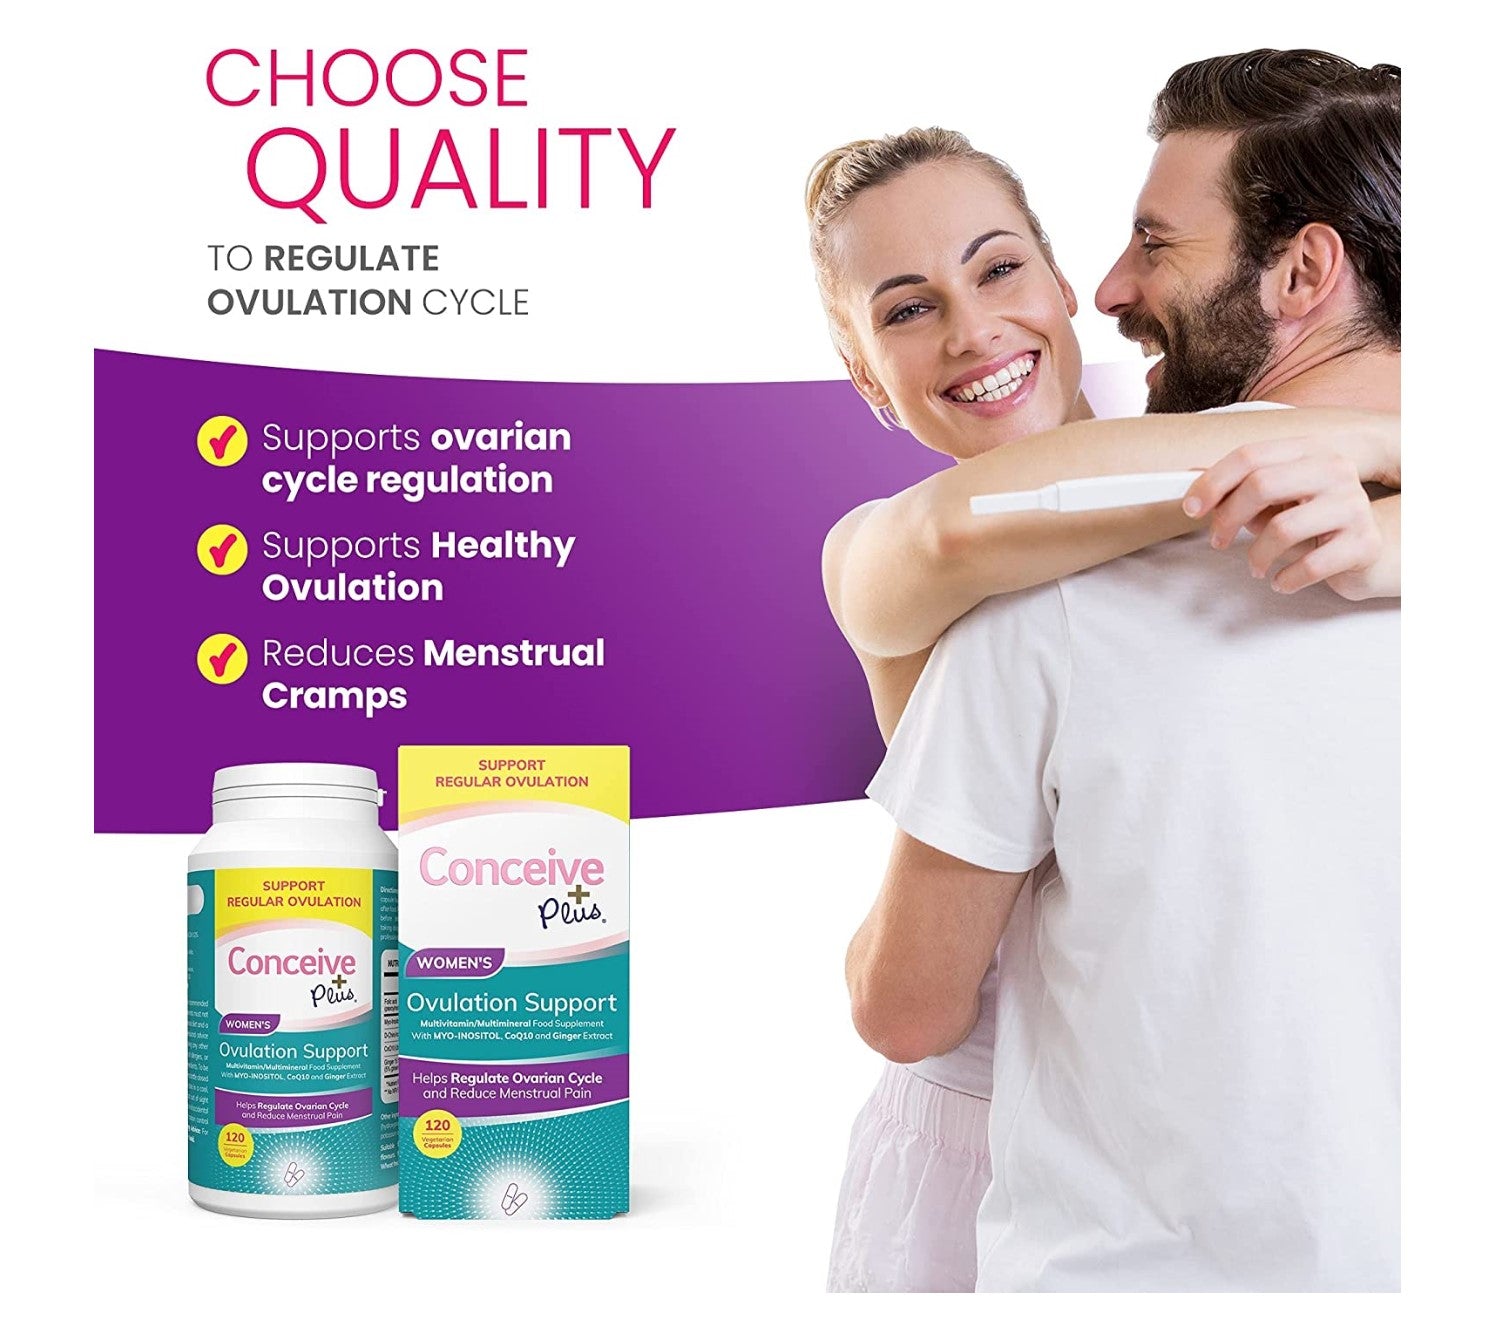 CONCEIVE PLUS Fertility Supplements (Myo Inositol) 120 capsules